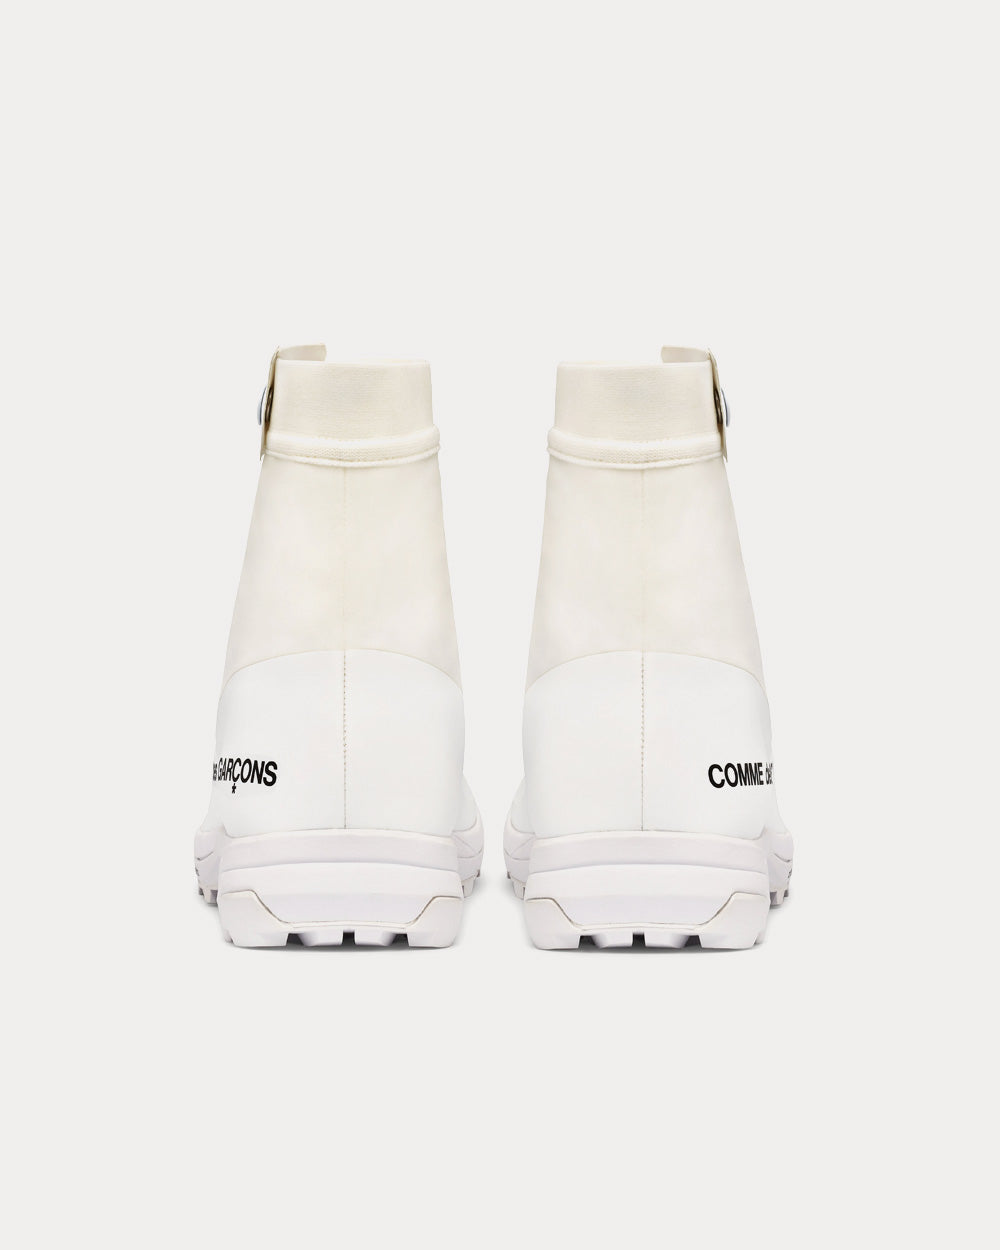 Salomon x Comme des Garçons - XA-Alpine 2 White High Top Sneakers